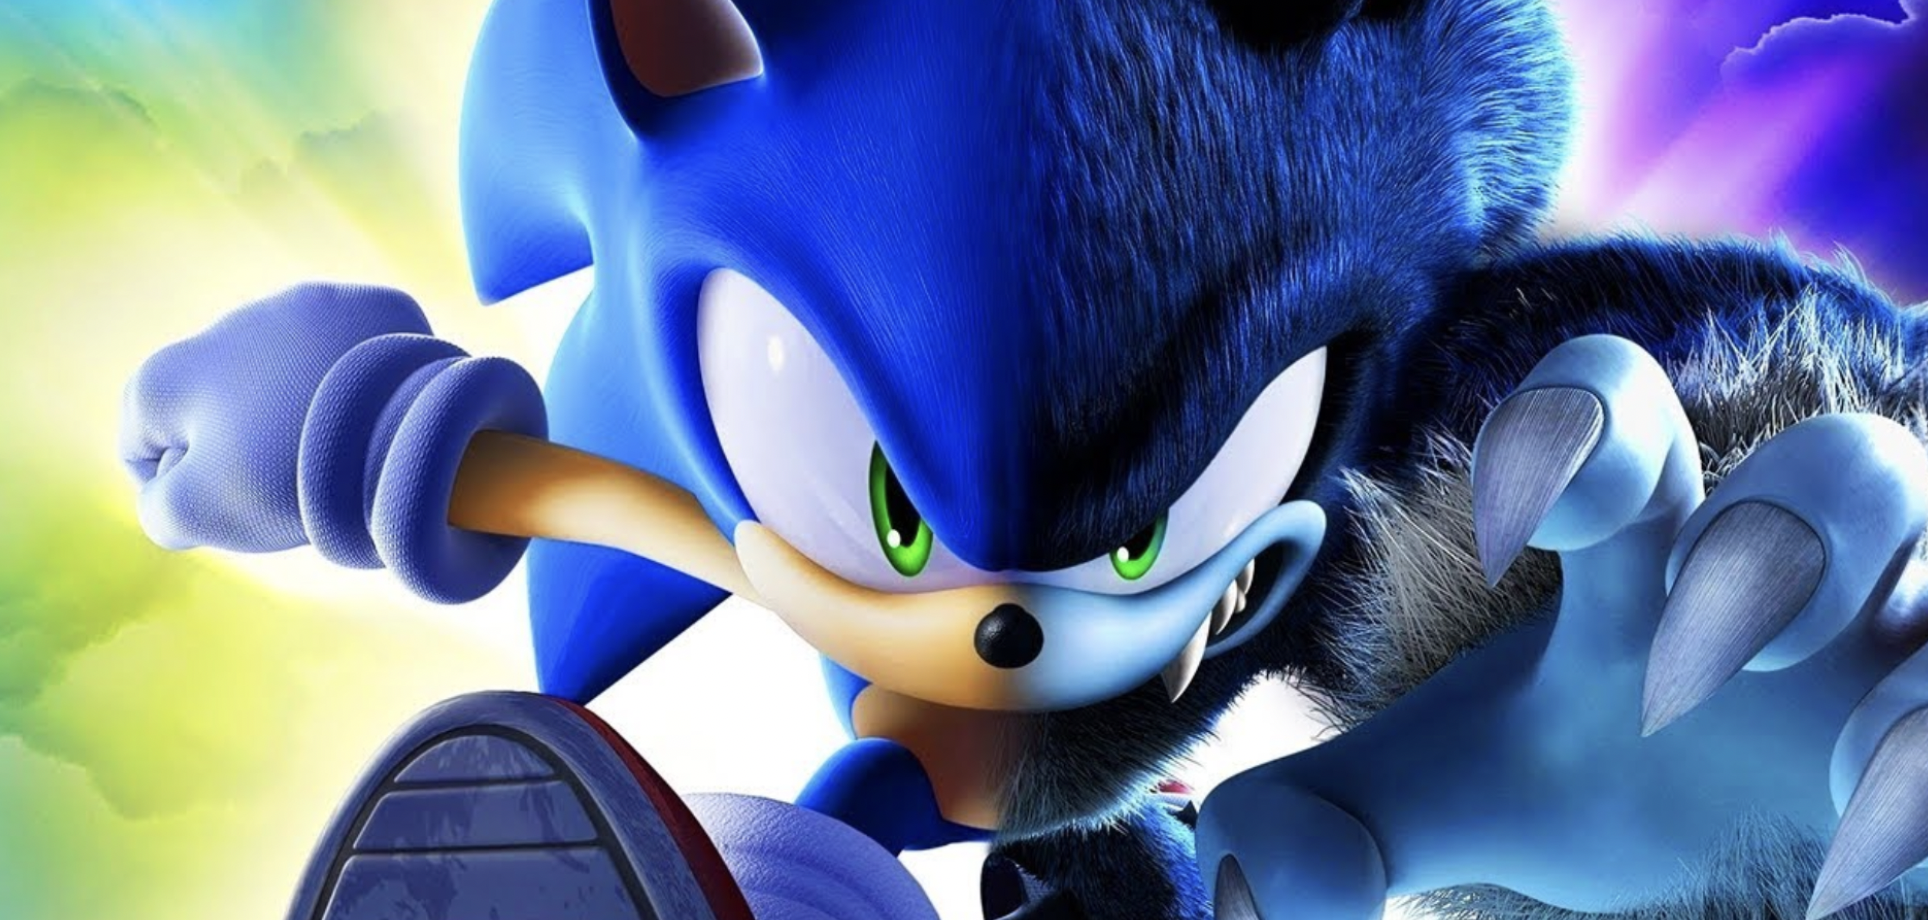 Sonic The Hedgehog 2006 【Xbox 360】 - ✪ Gameplay ✪